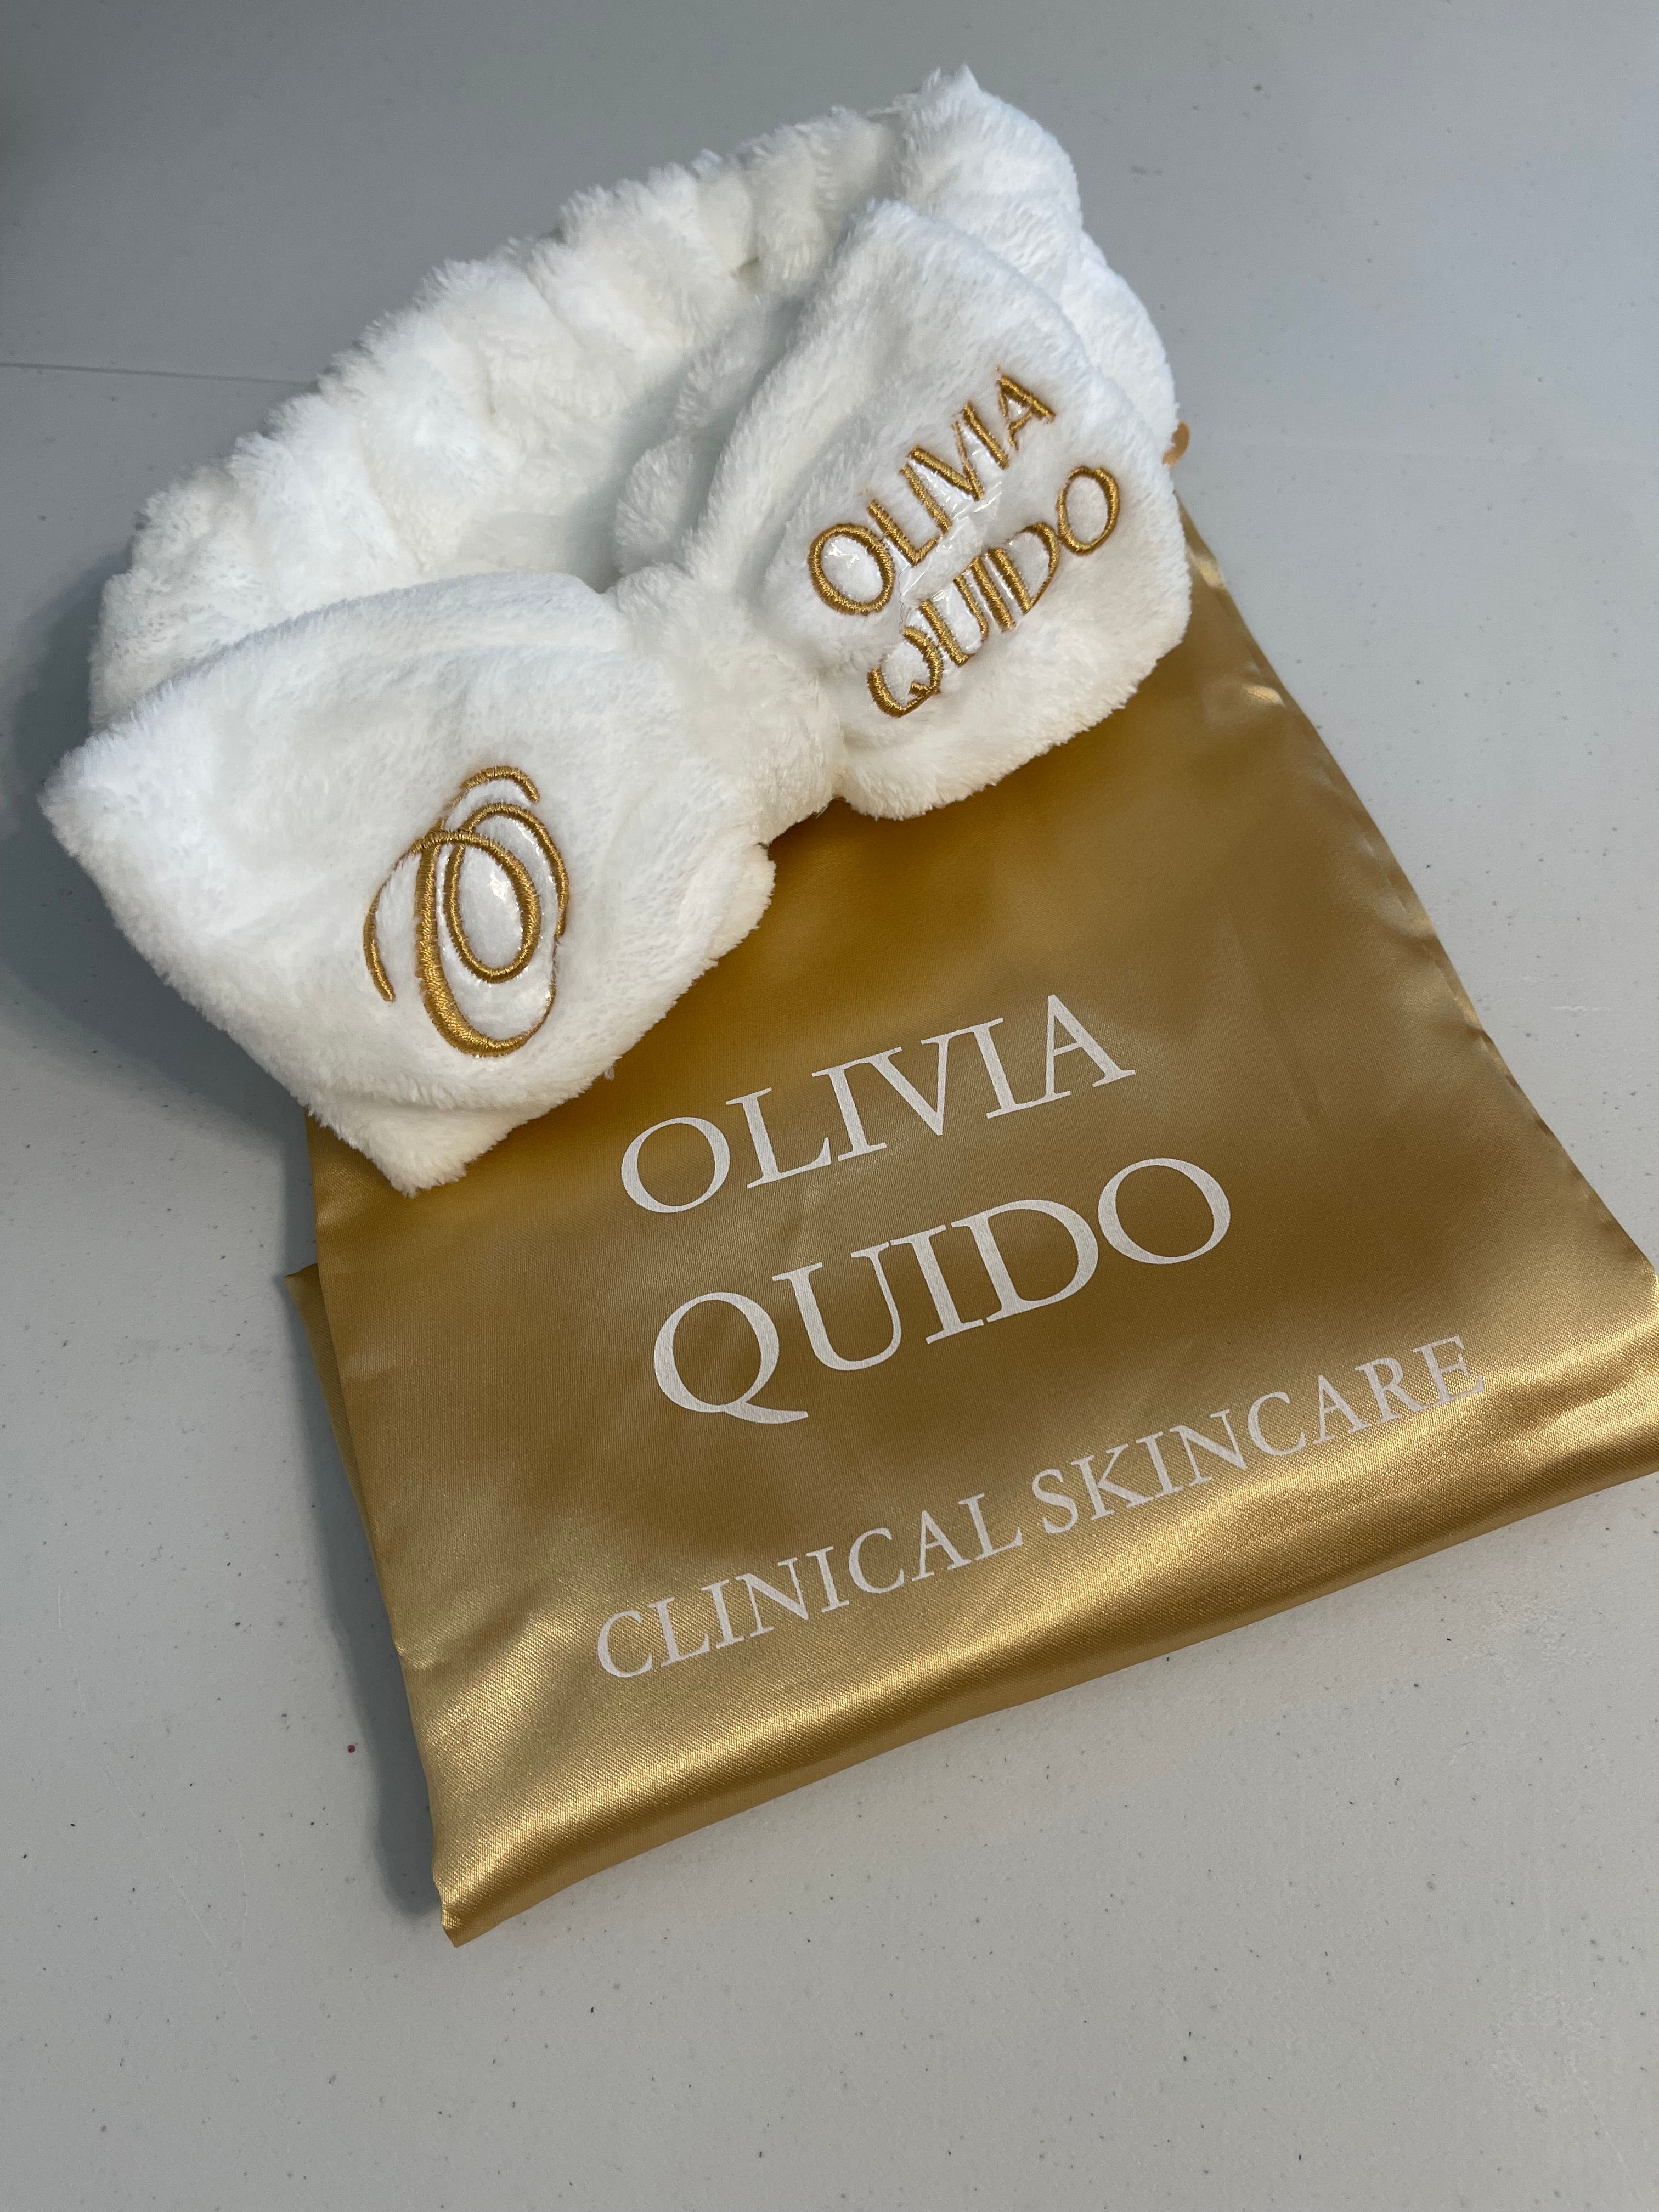 Ms. Olivia Quido Skincare Headband